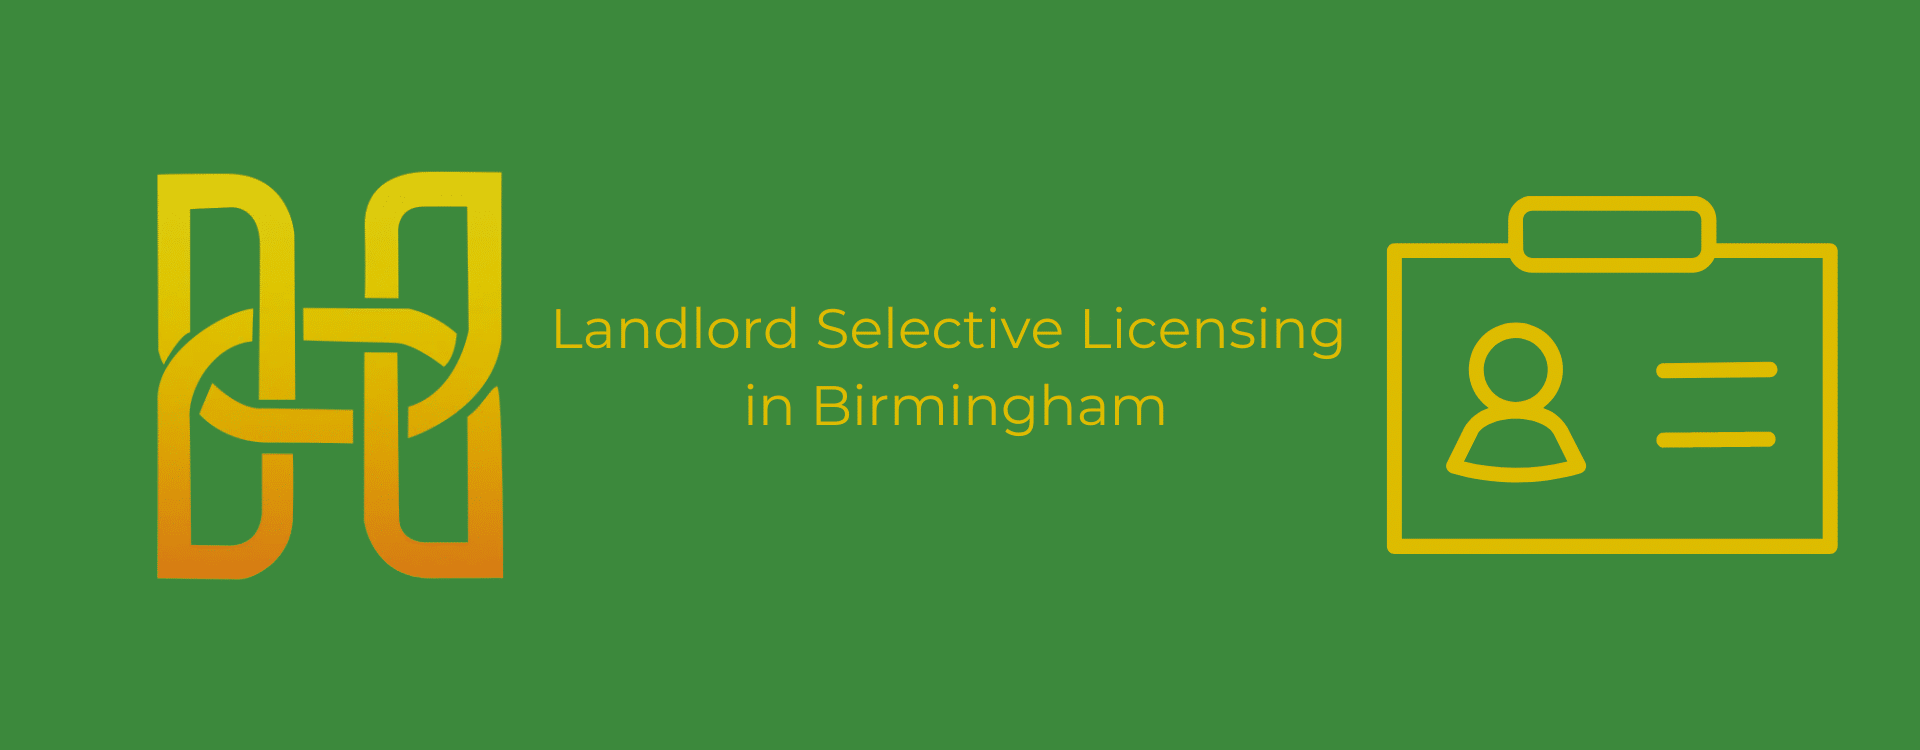 Landlord Selective Licensing in Birmingham